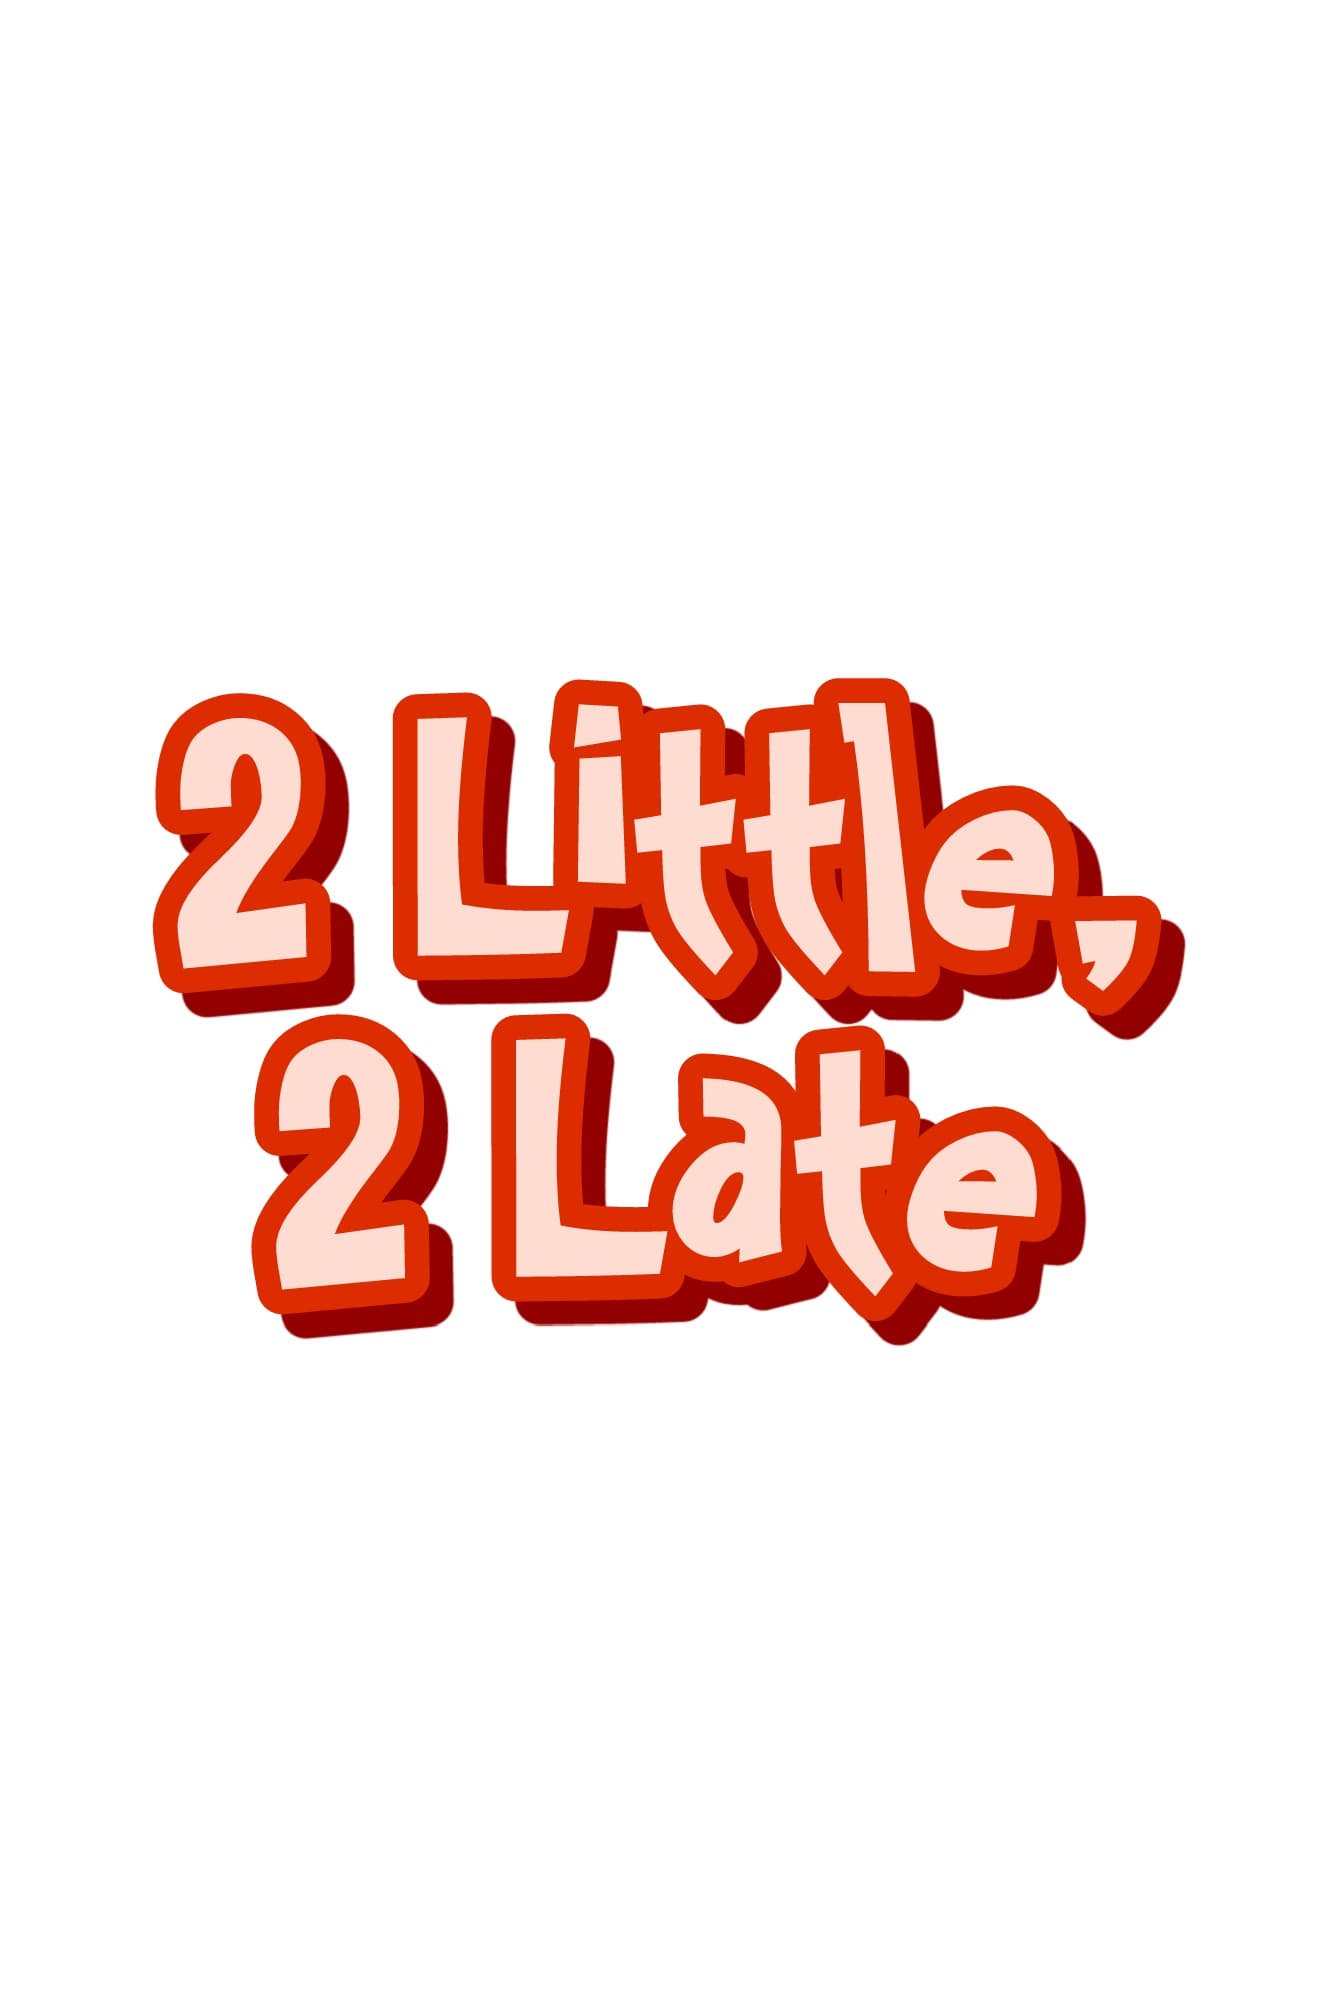 2 Little, 2 Late